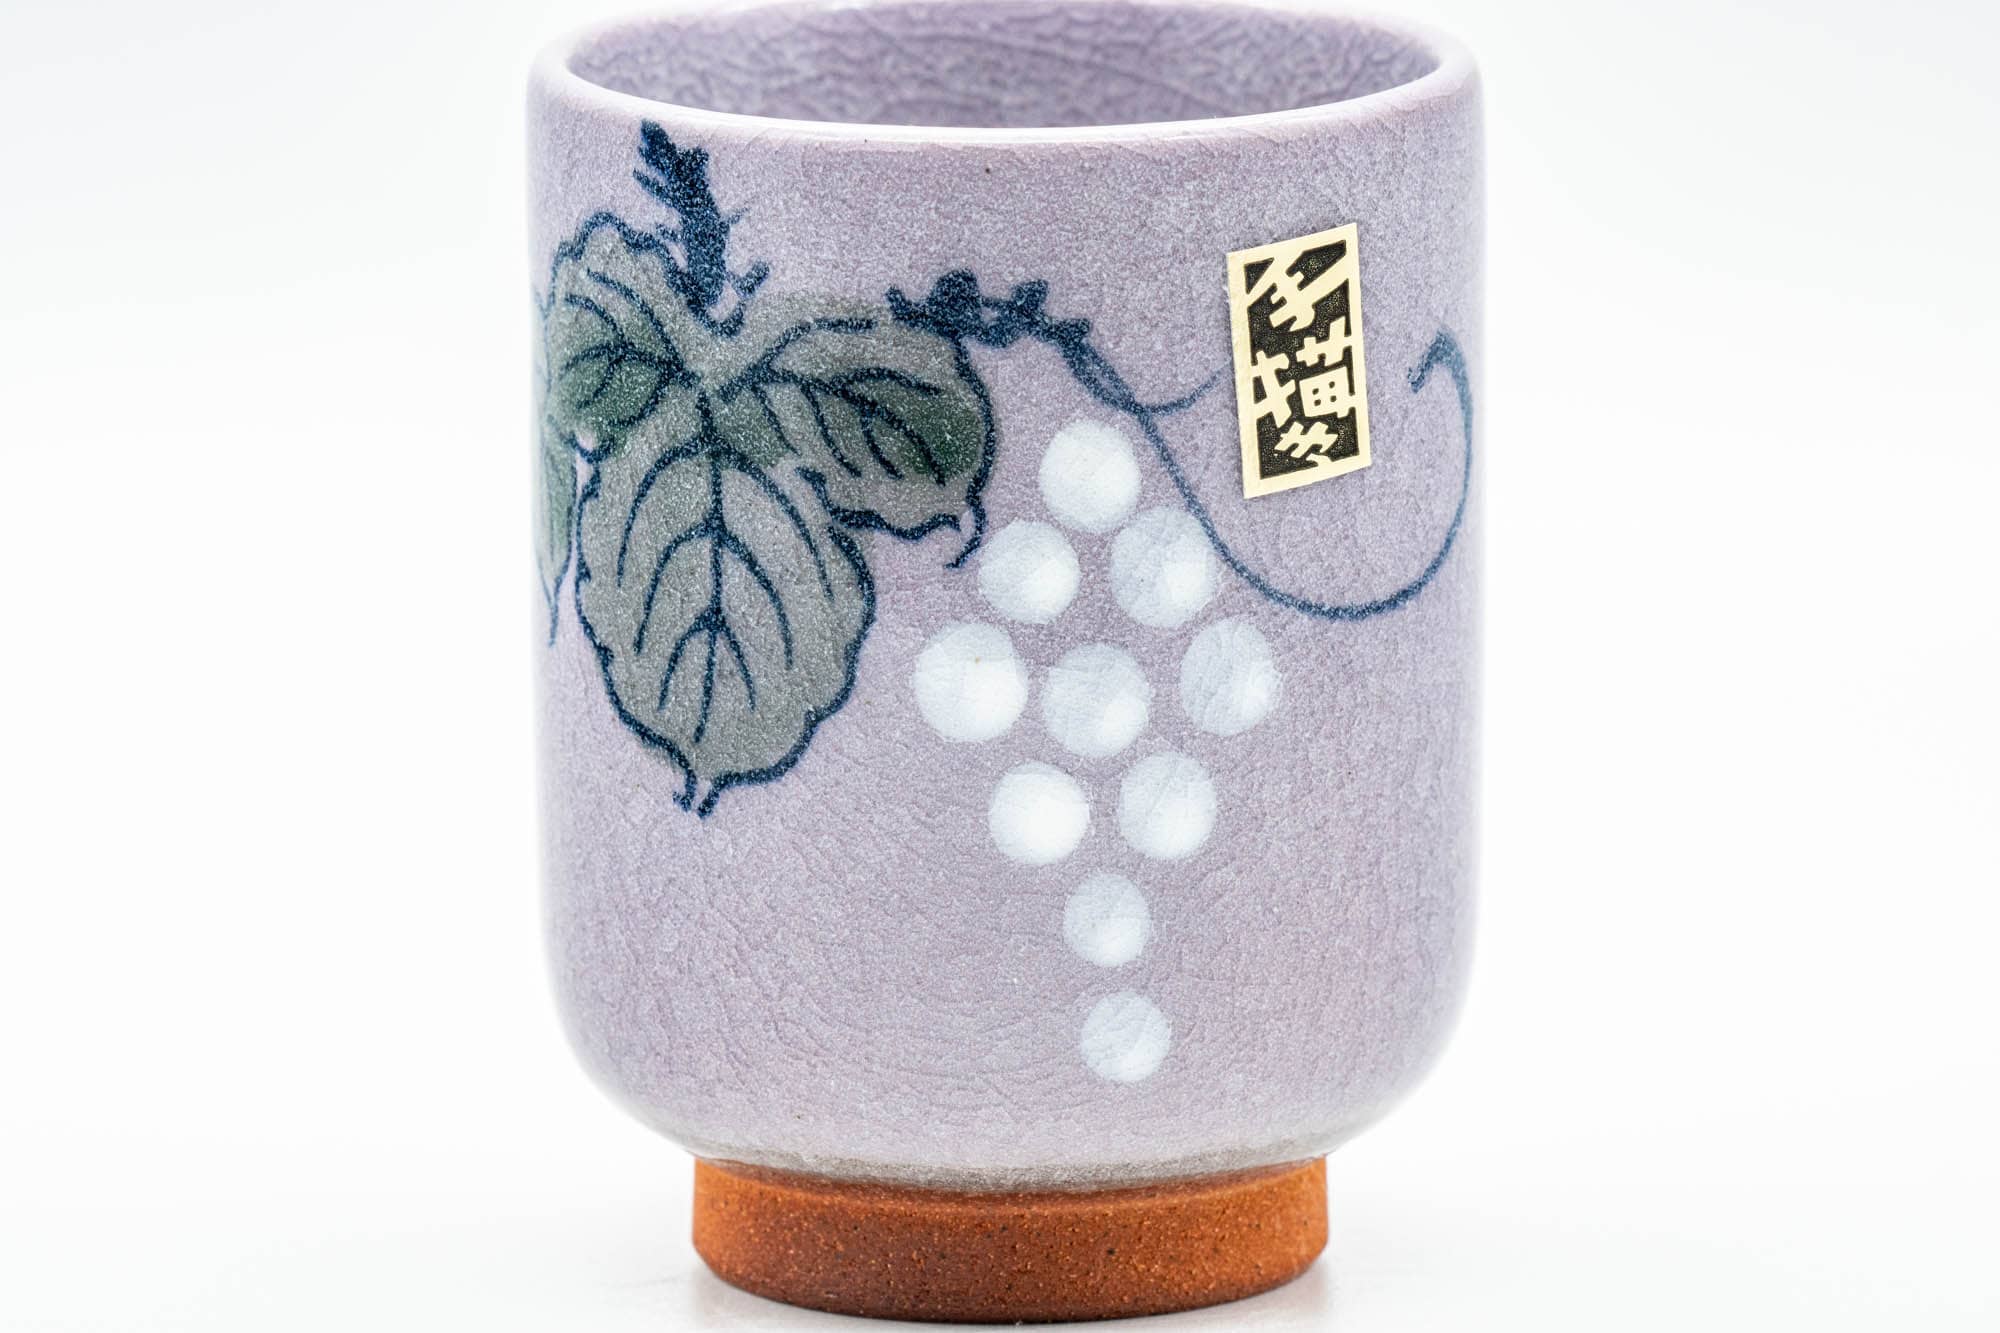 Japanese Teacup - Grapevine Purple Celadon Glazed Yunomi - 250ml